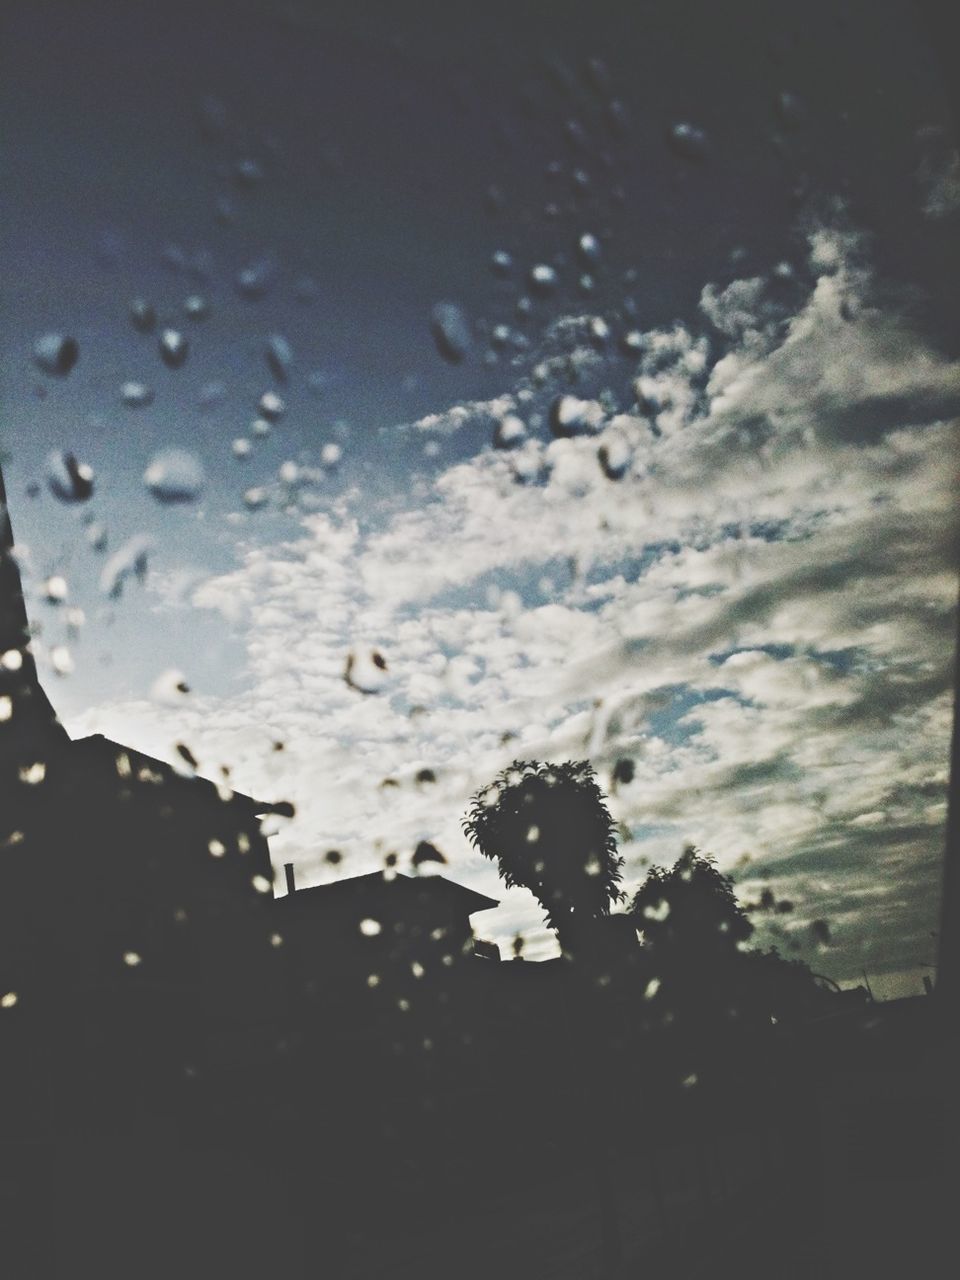 wet, drop, window, rain, sky, weather, glass - material, transparent, silhouette, water, indoors, raindrop, dusk, season, cloud - sky, building exterior, built structure, glass, architecture, nature